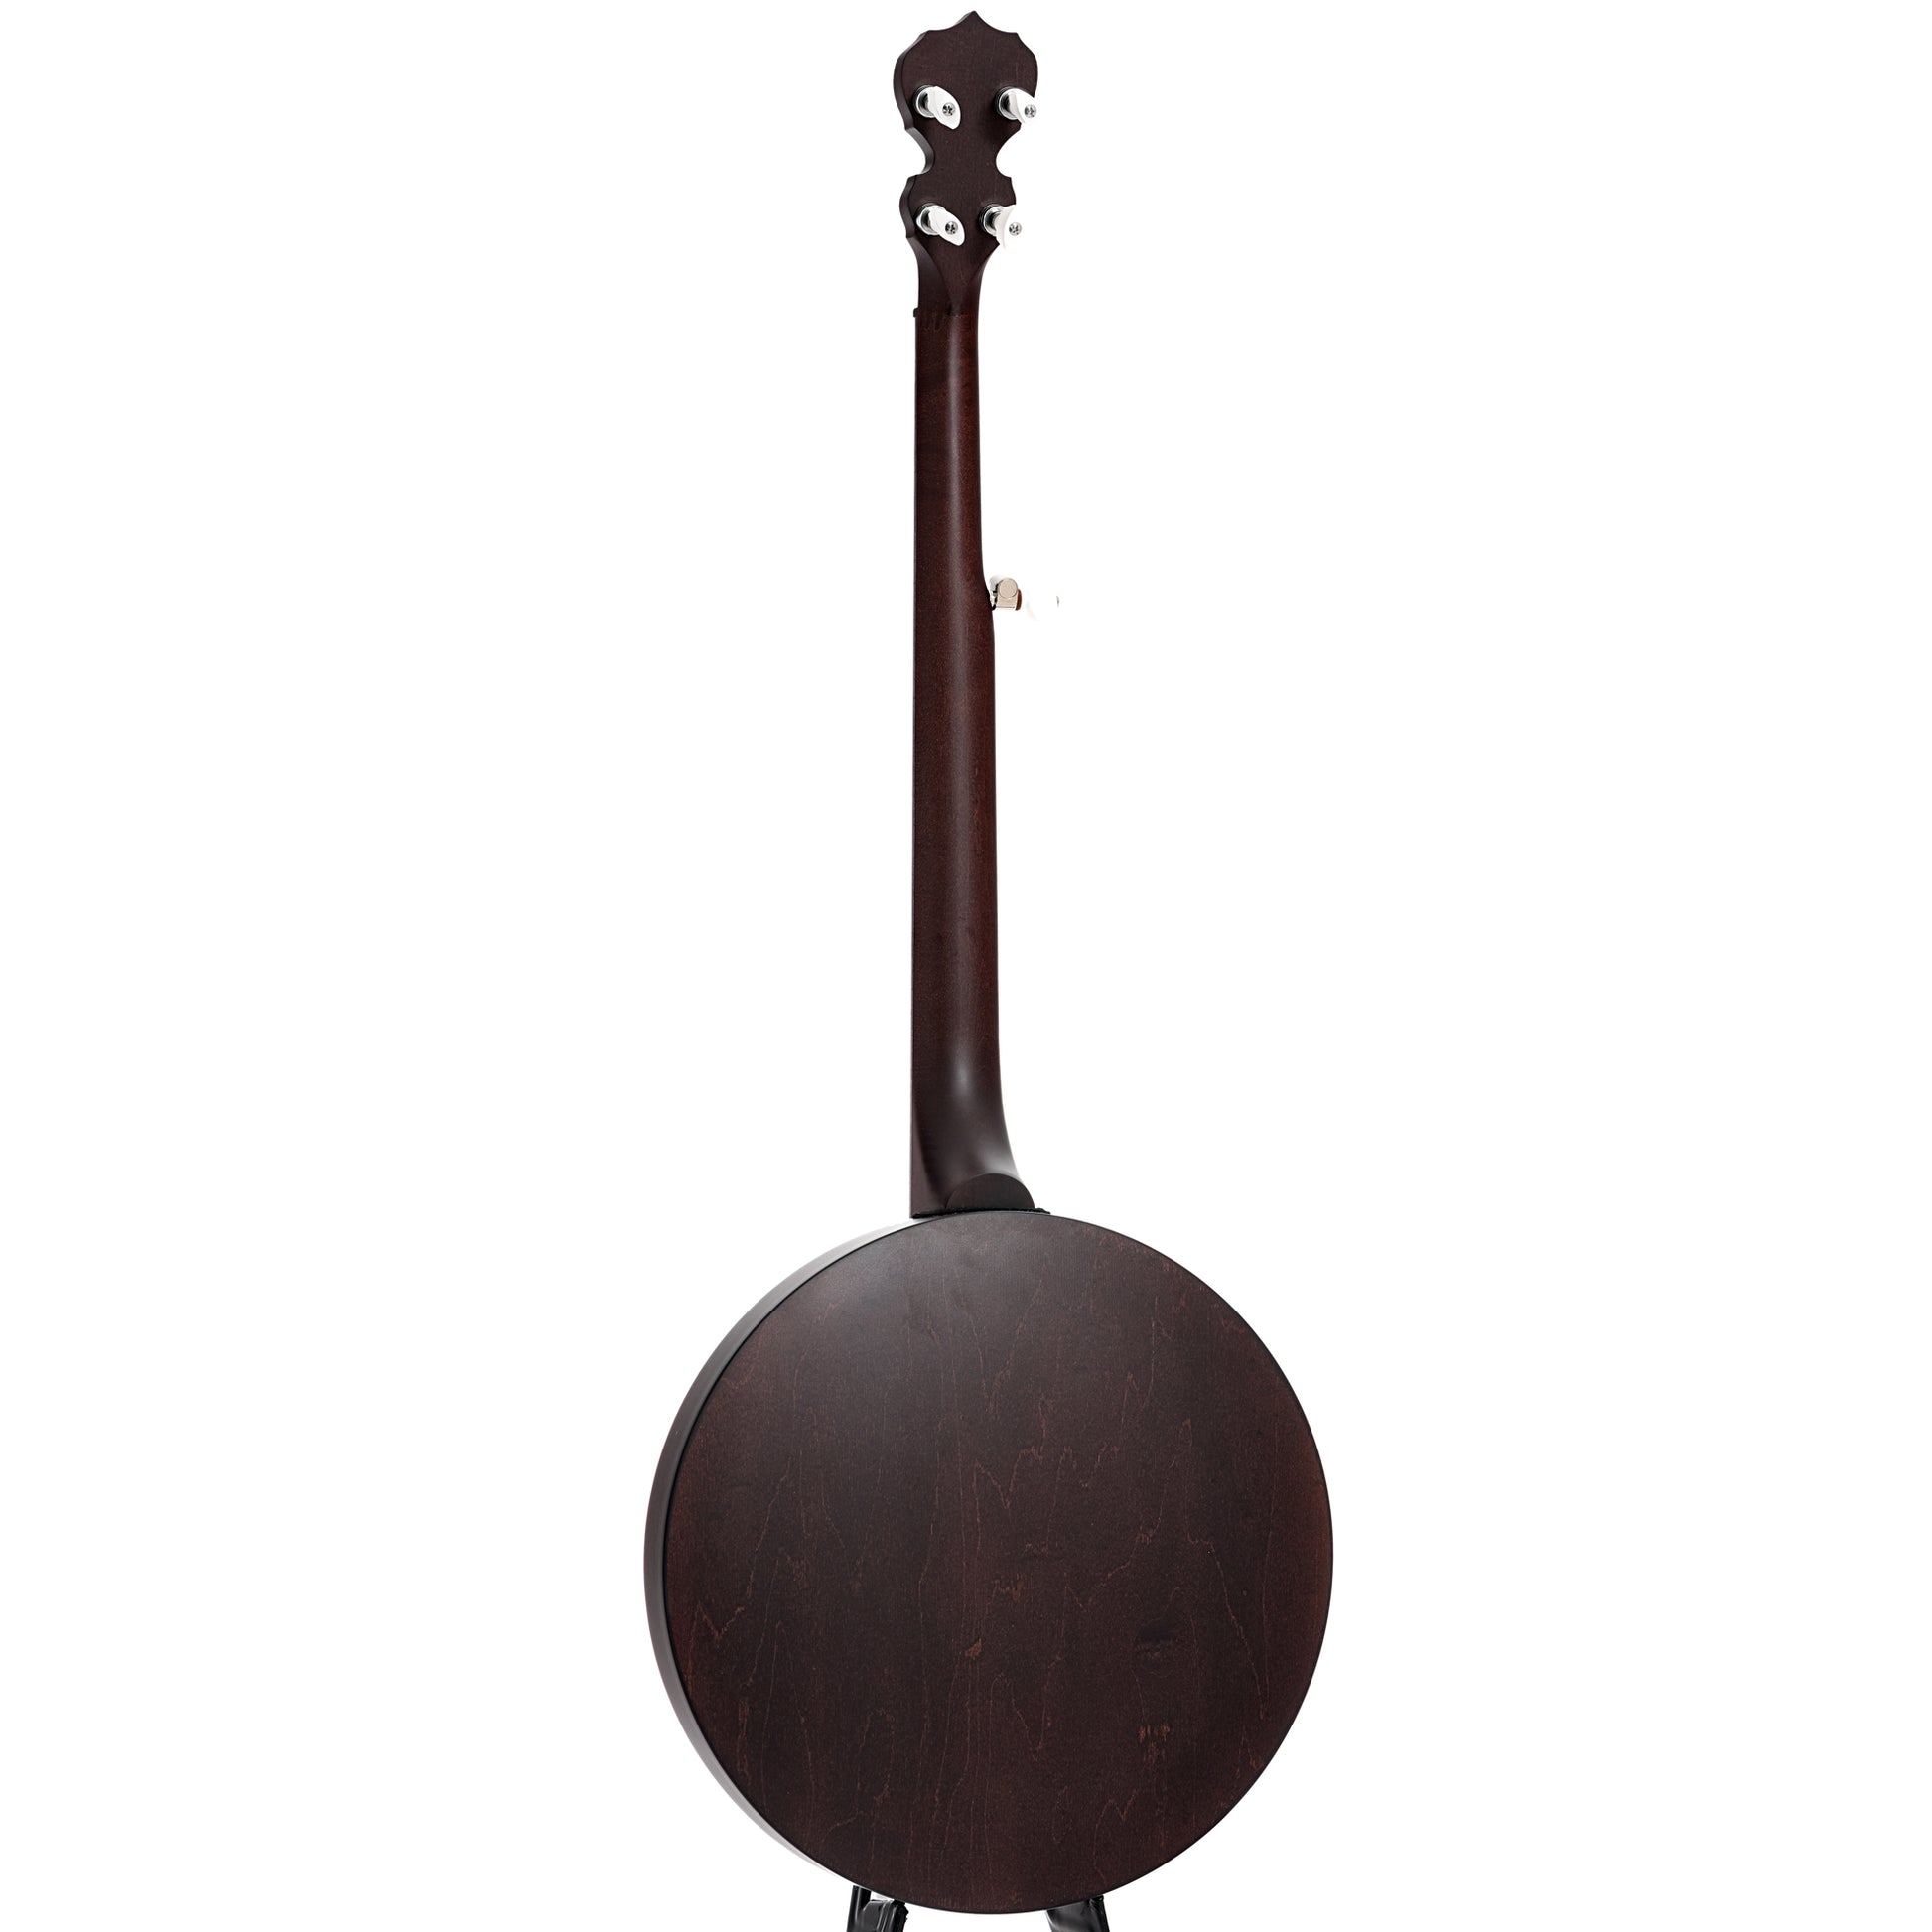 Full back and side of Deering Artisan Goodtime Special Resonator Banjo